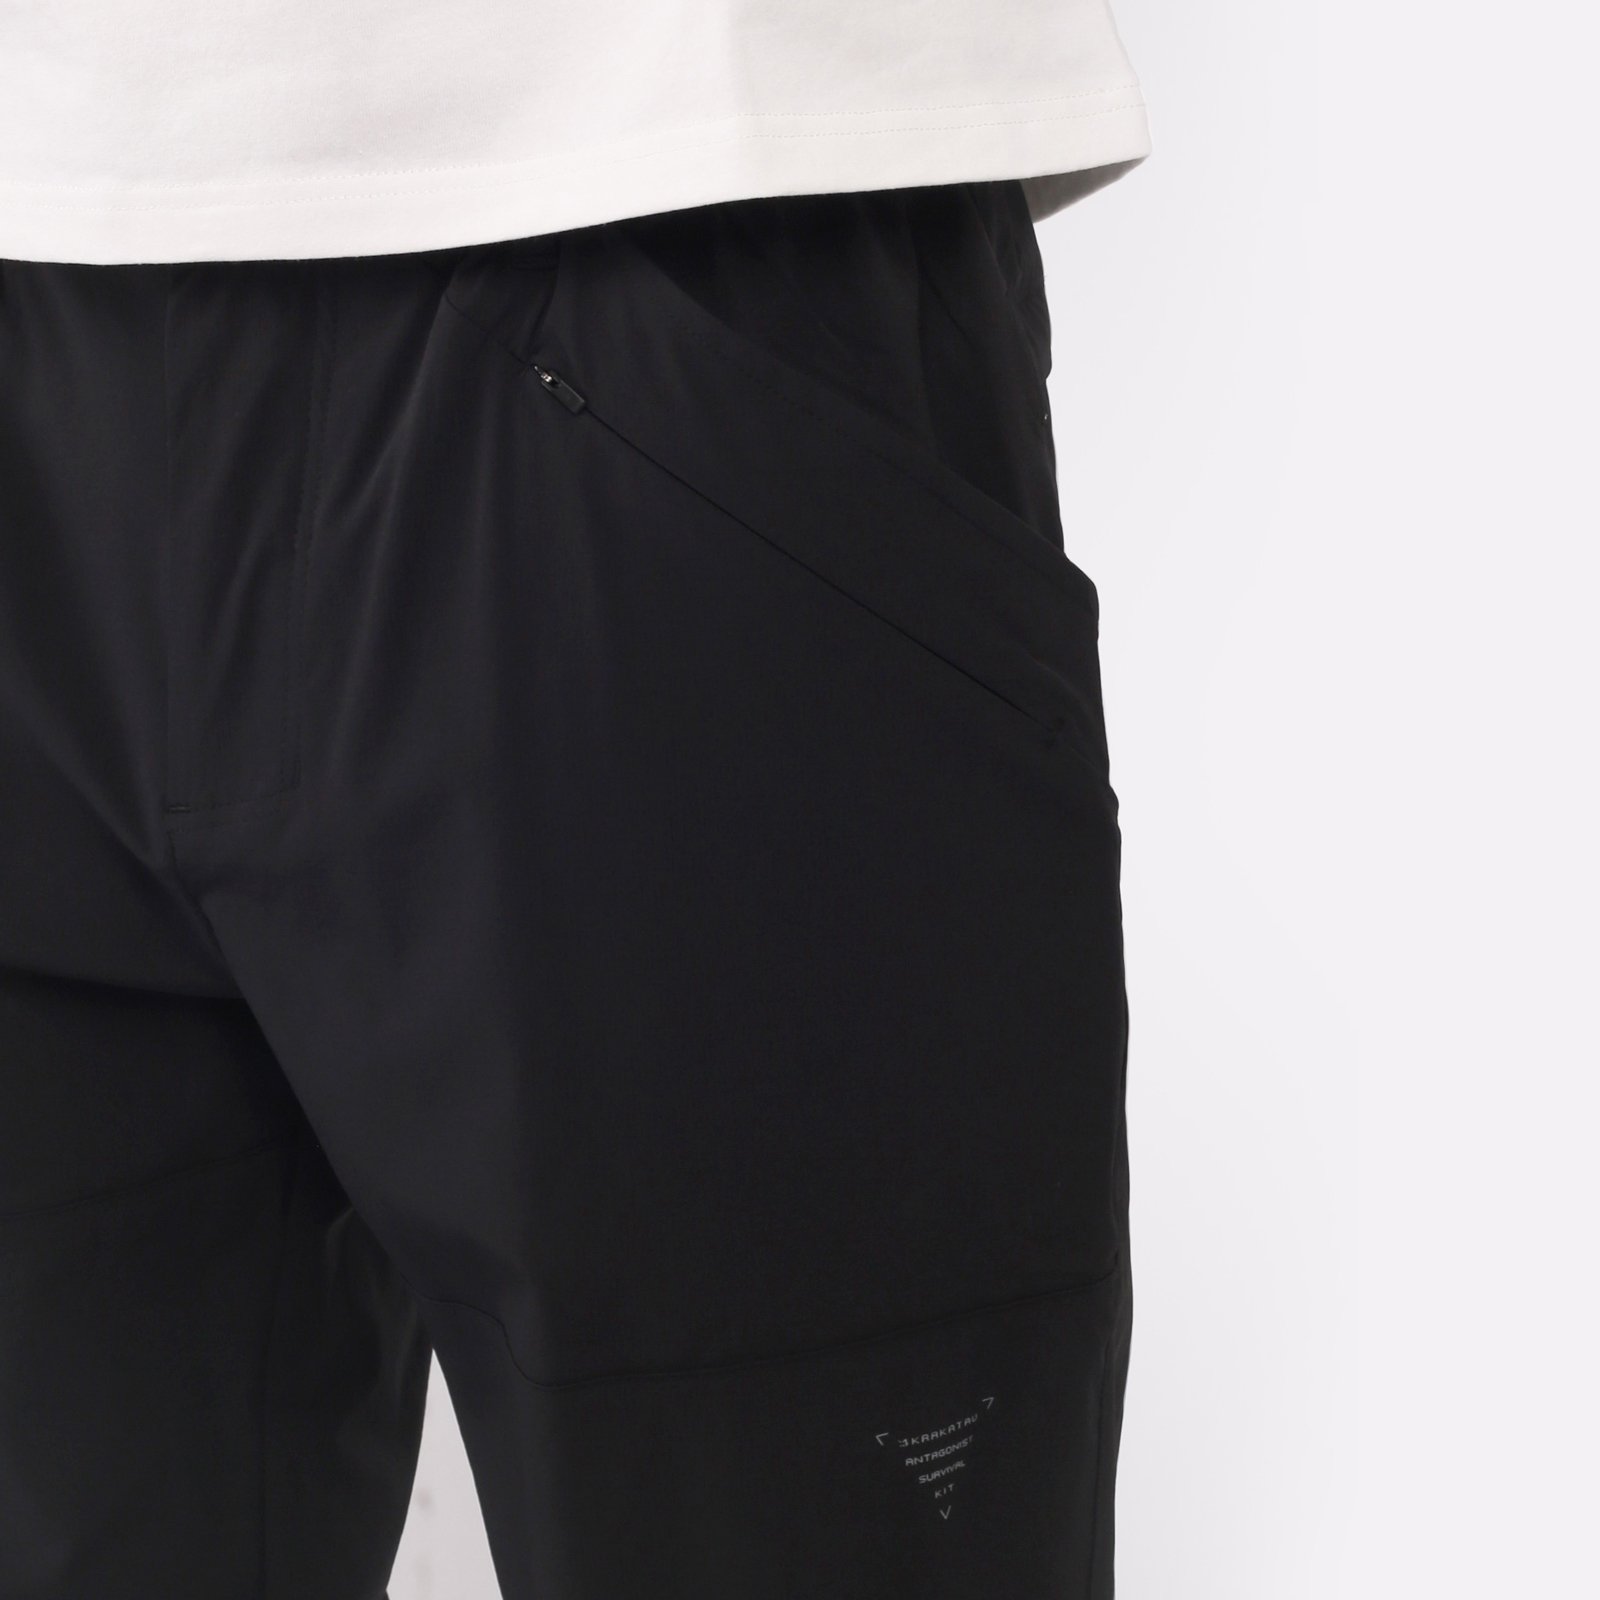 мужские брюки KRAKATAU Rm180-1  (Rm180-1-чёрный)  - цена, описание, фото 4